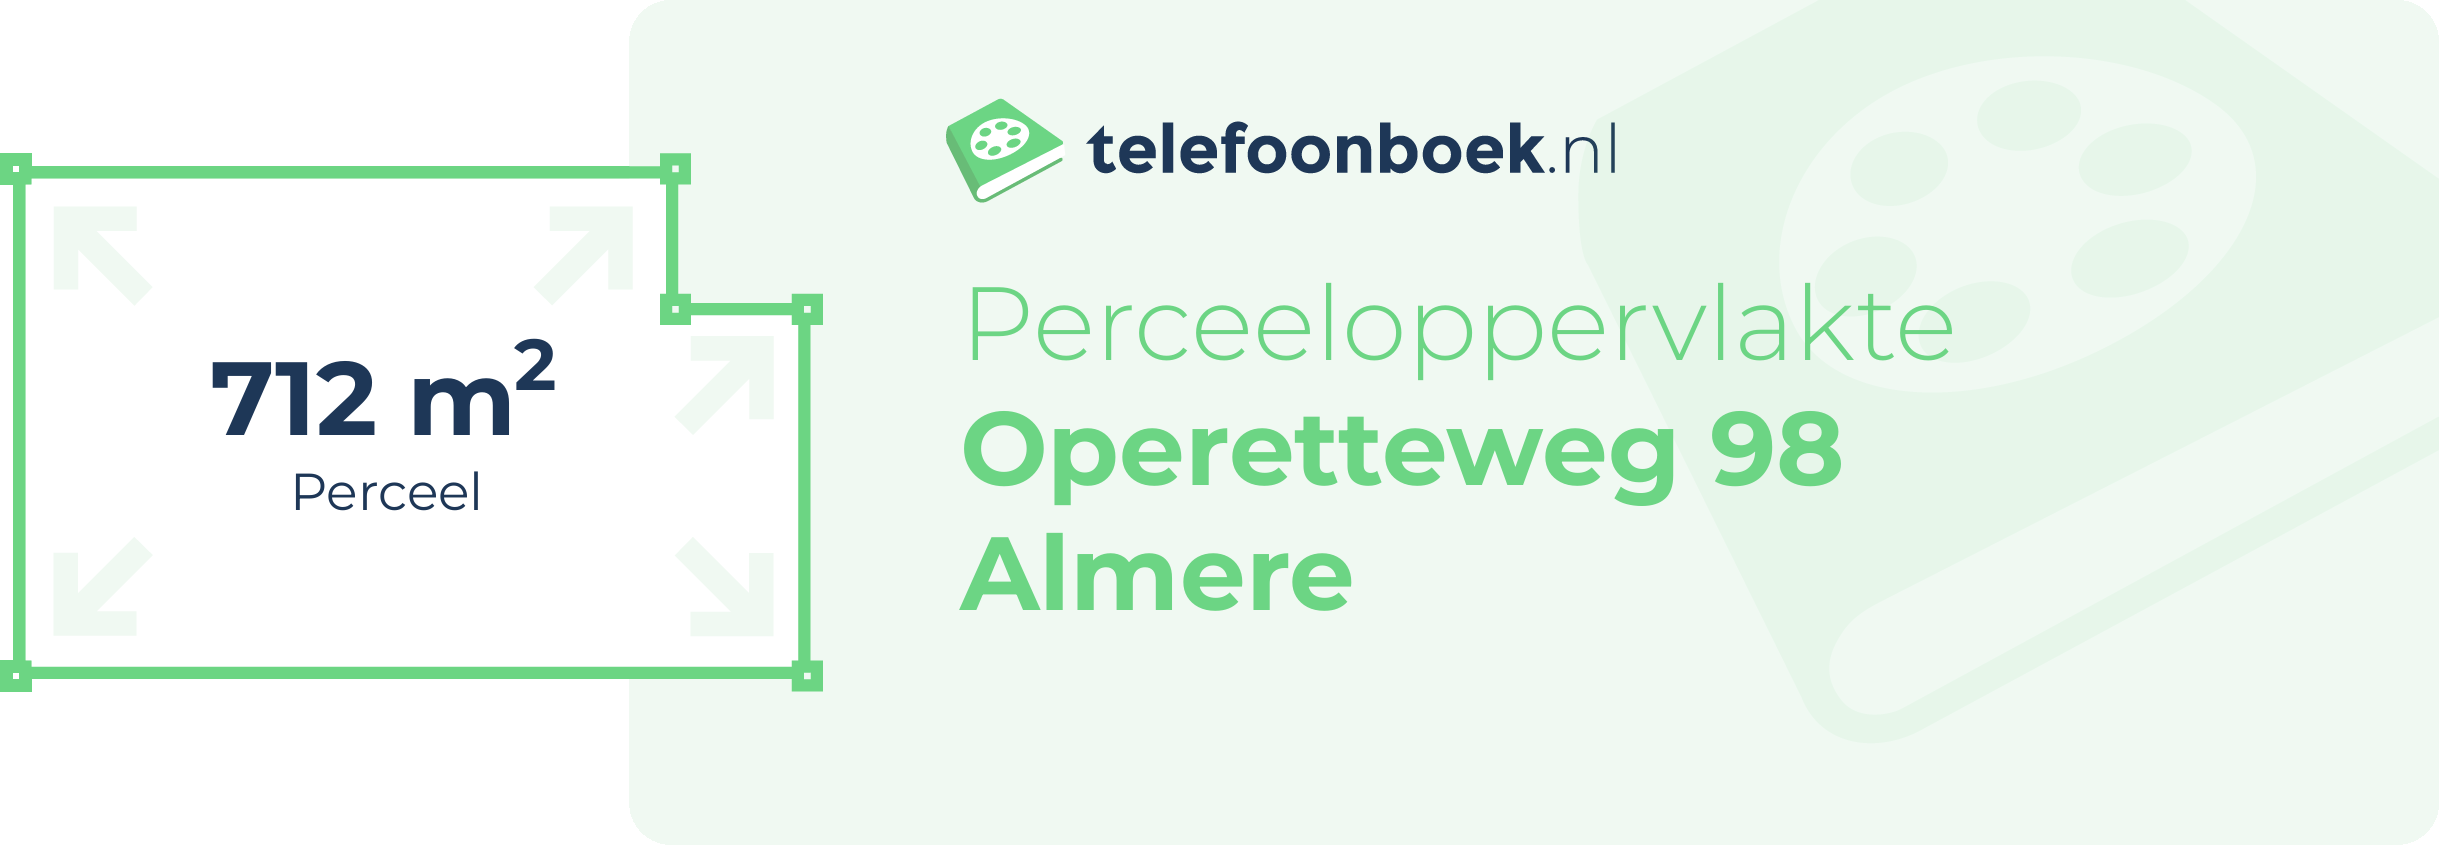 Perceeloppervlakte Operetteweg 98 Almere